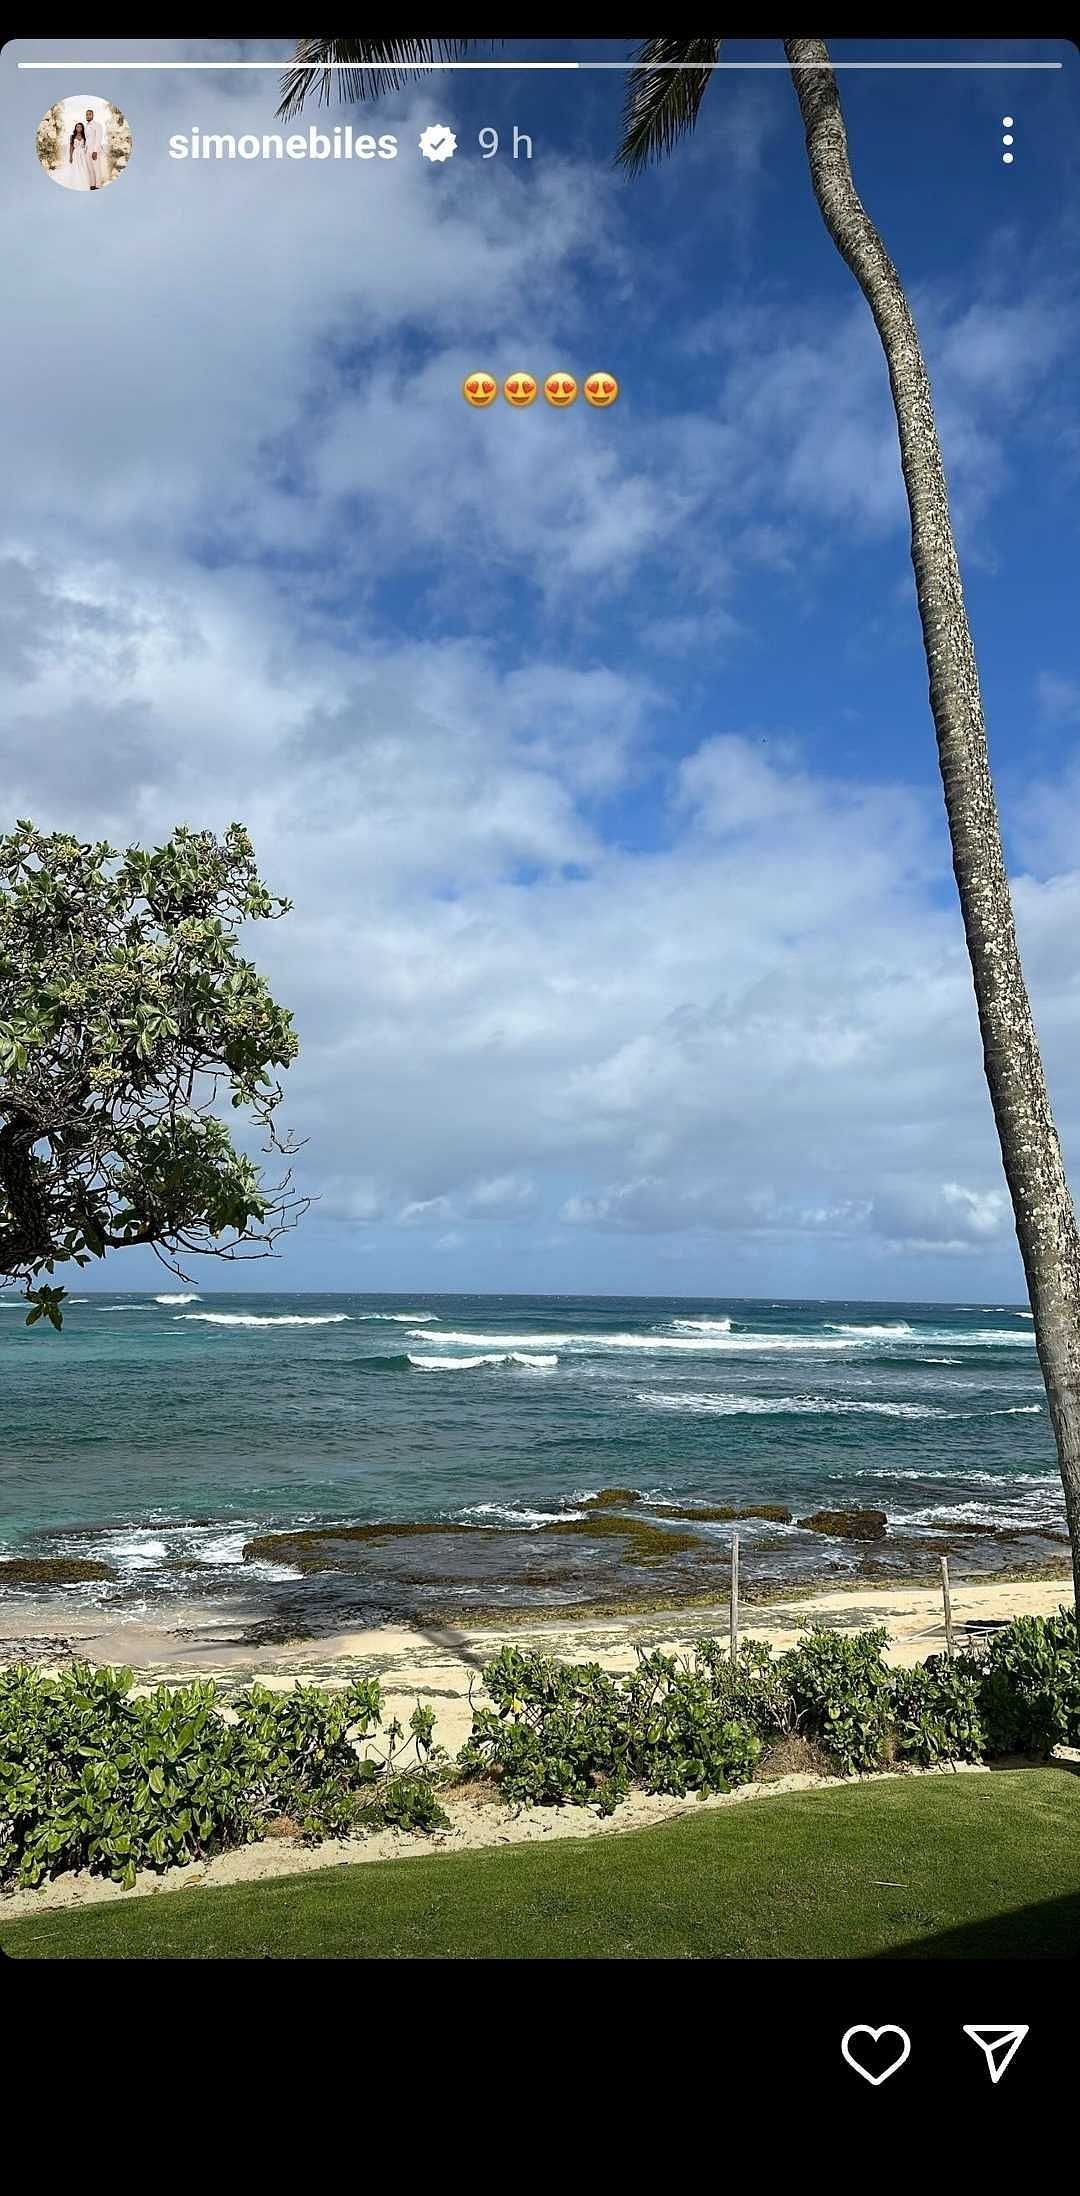 Simone Biles Instagram story - vacation in Hawaii.